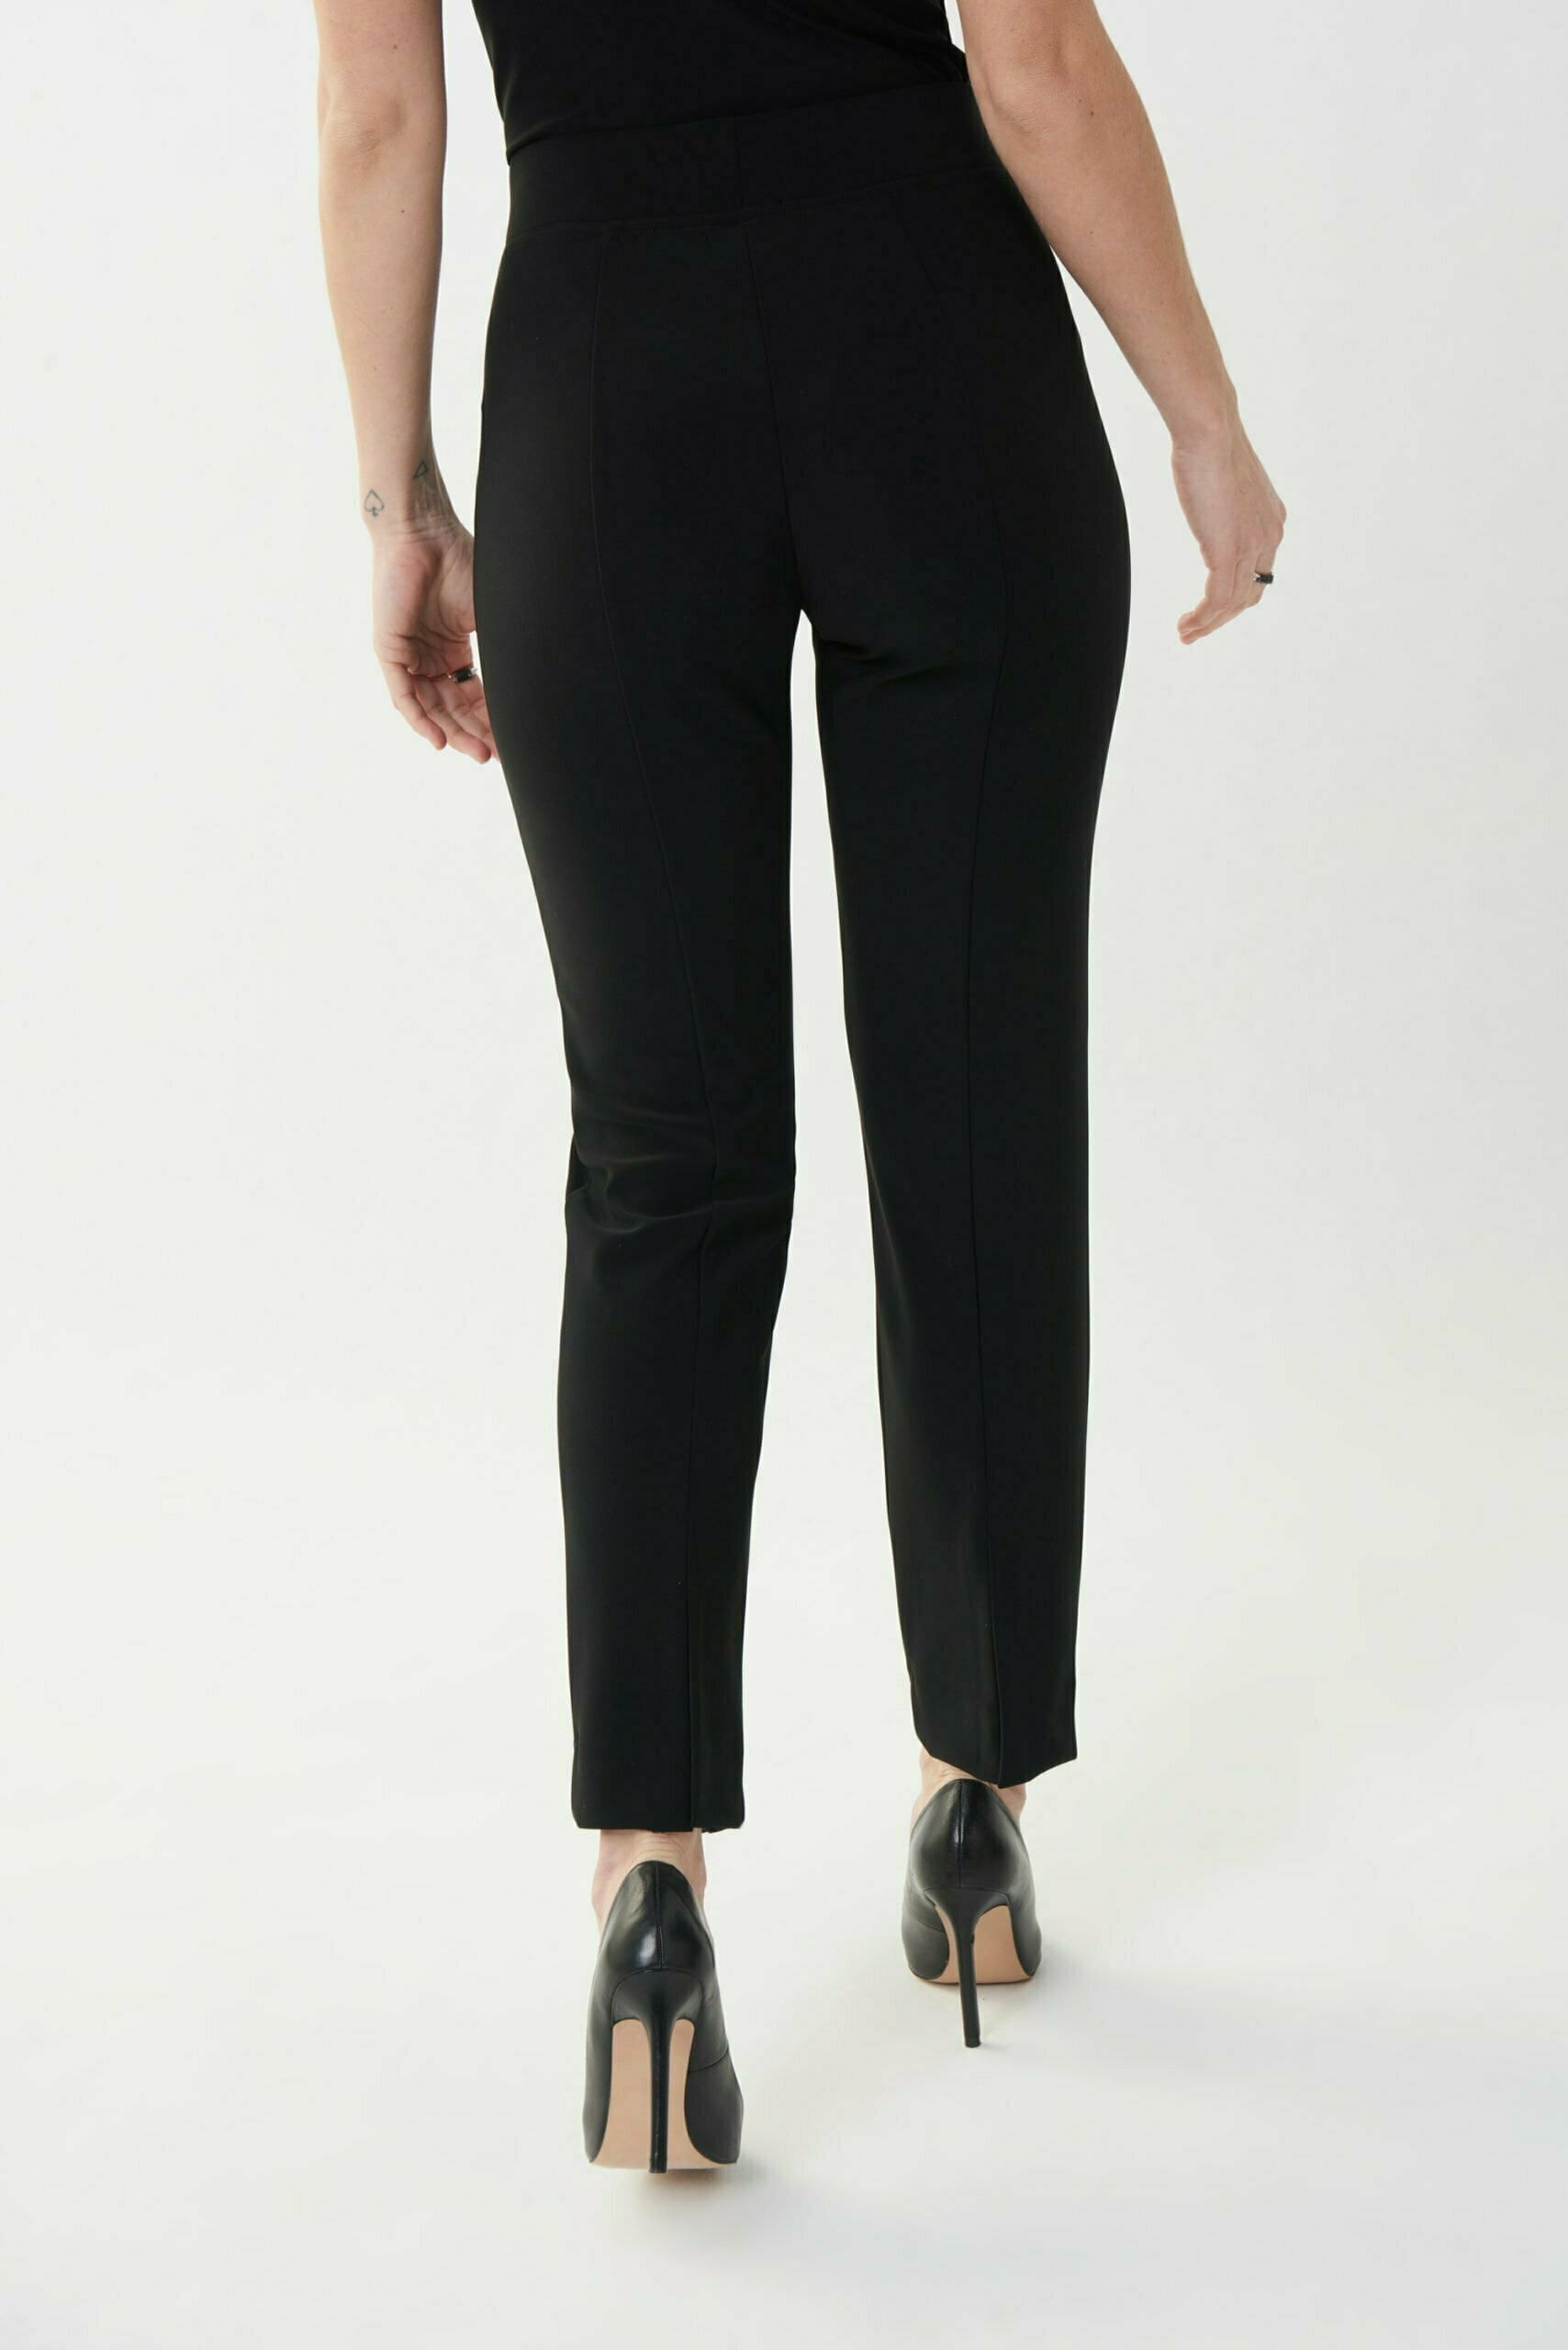 Joseph Ribkoff 143105 Black Trousers - Gertrude Fashions